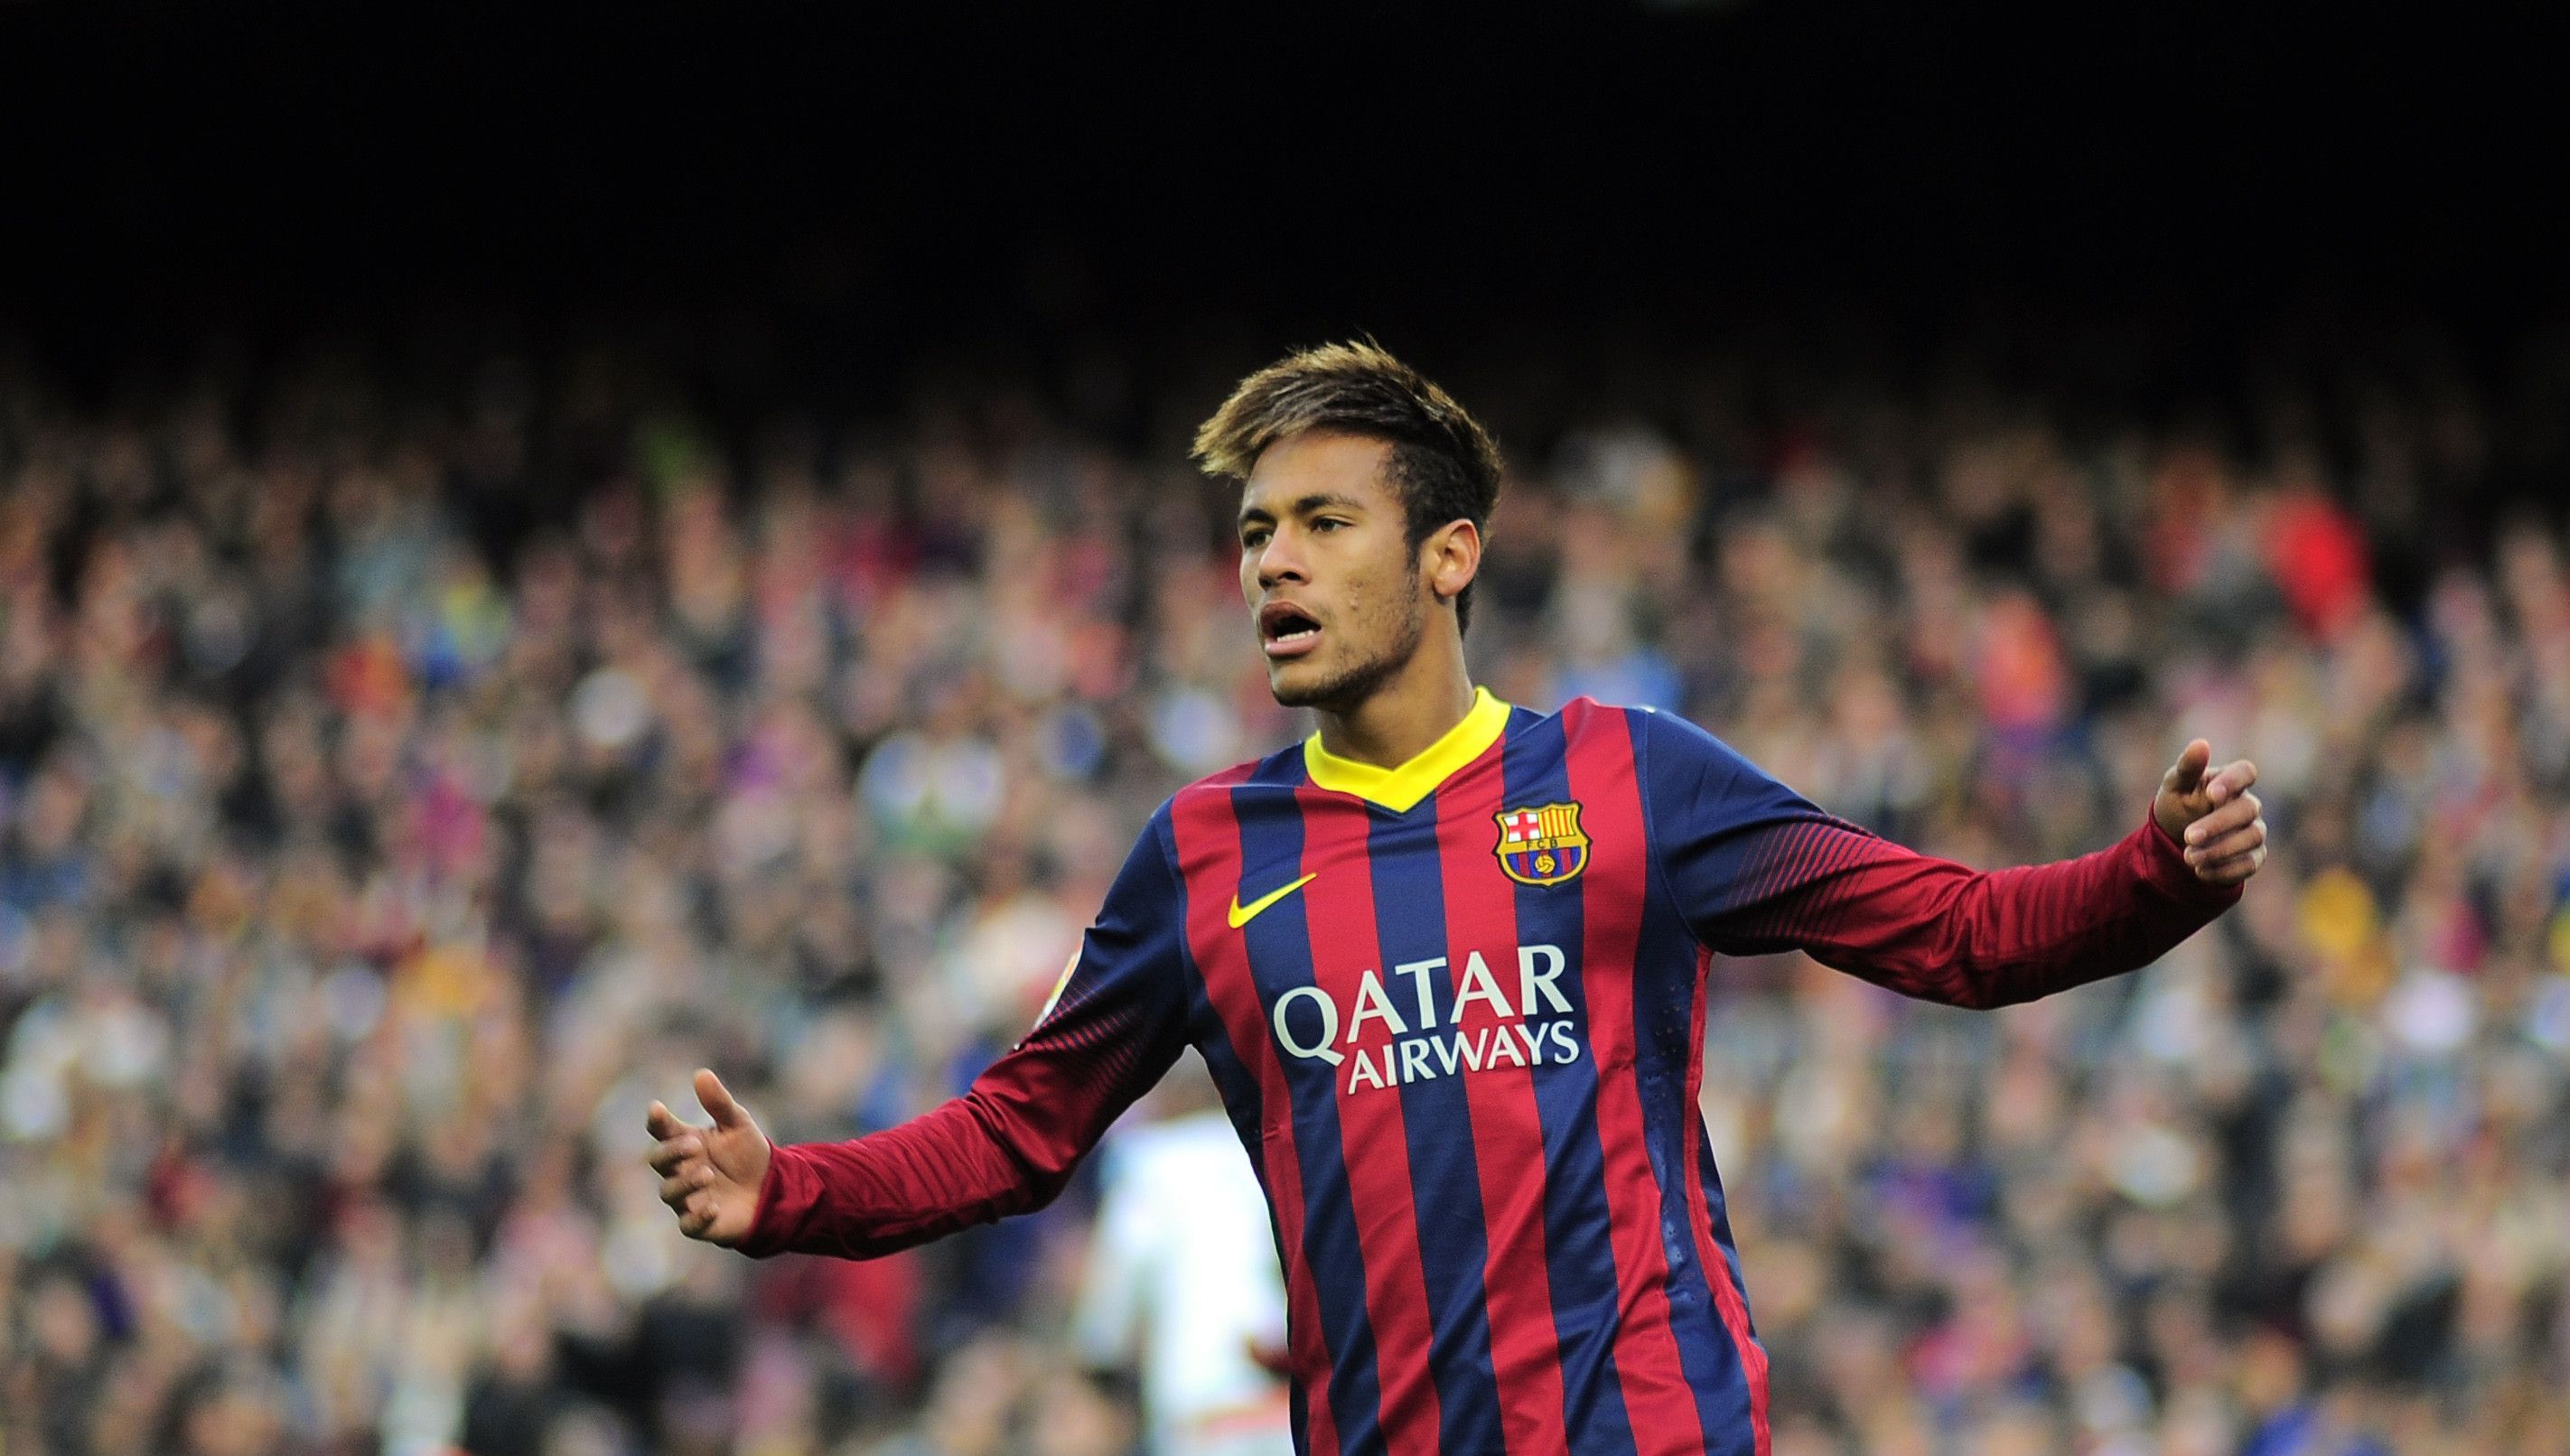 Neymar Football Soccer Player Free Hd Ball Goal Enjoying Mobile Desktop Bakground Download Wallpaper Photos